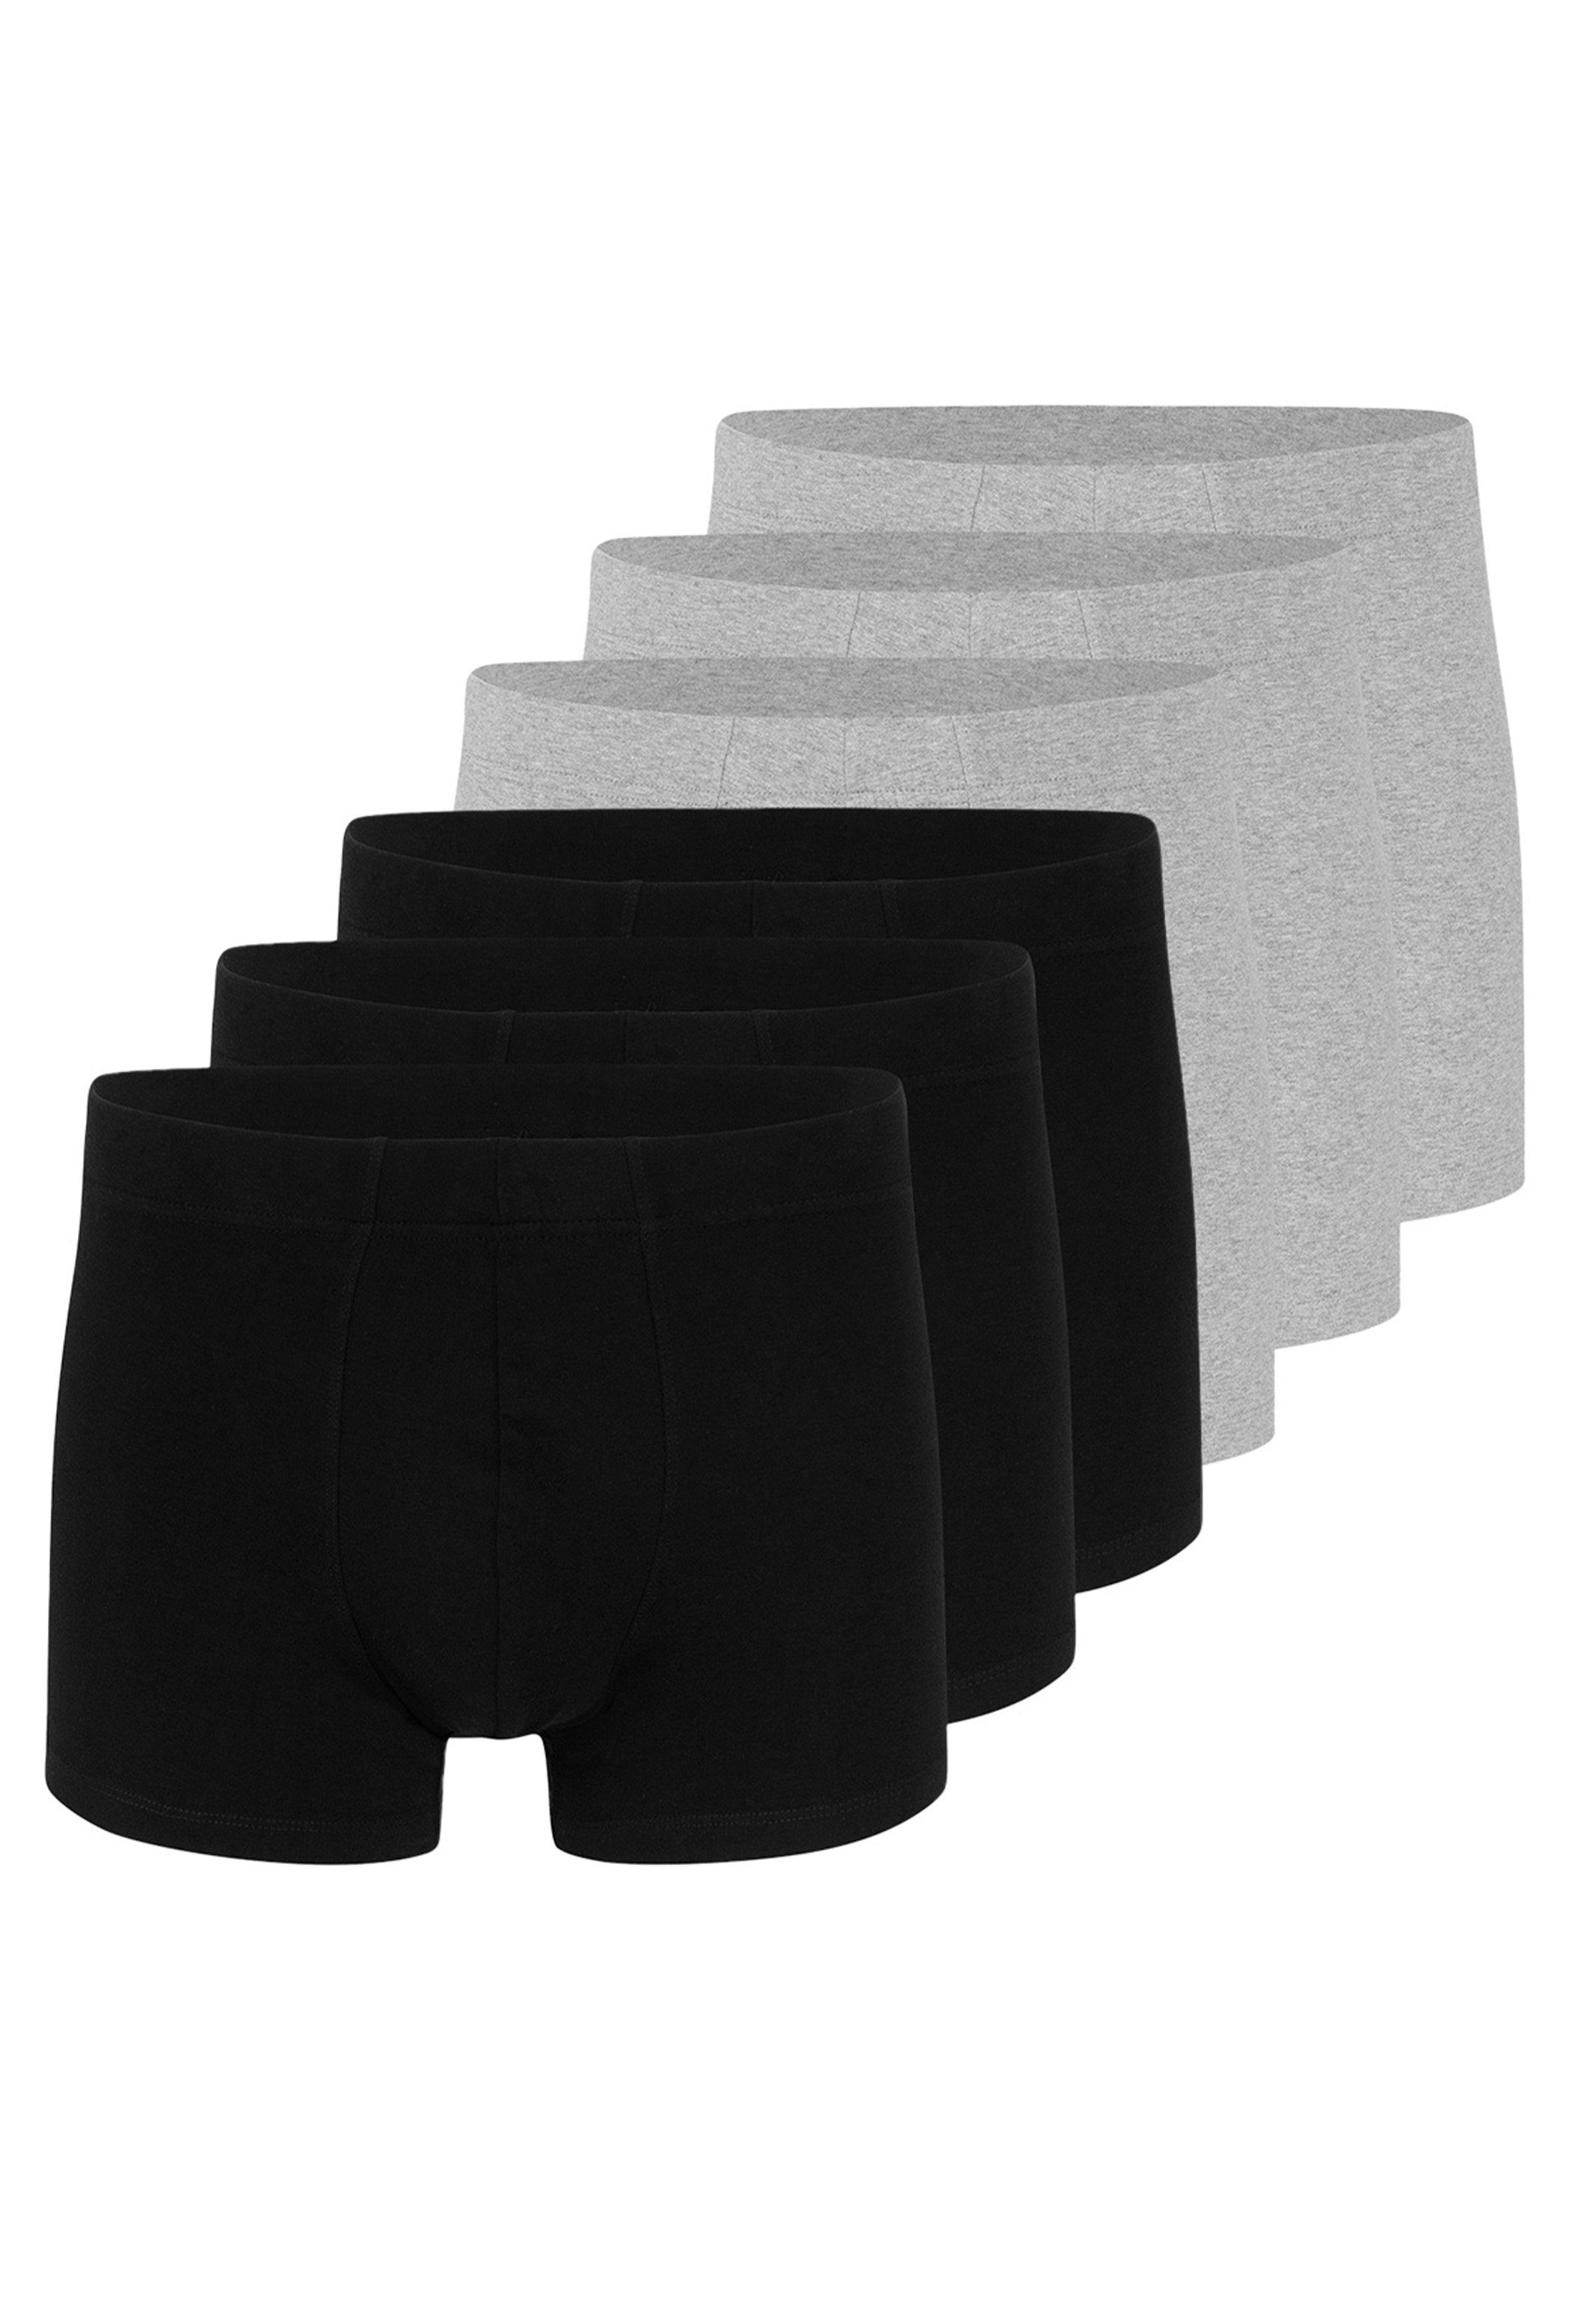 Almonu Retro Boxer 6er Pack Organic Cotton (Spar-Set, 6-St) Retro Short / Pant - Baumwolle - Ohne Eingriff - Atmungsaktiv Schwarz / Grau Melange